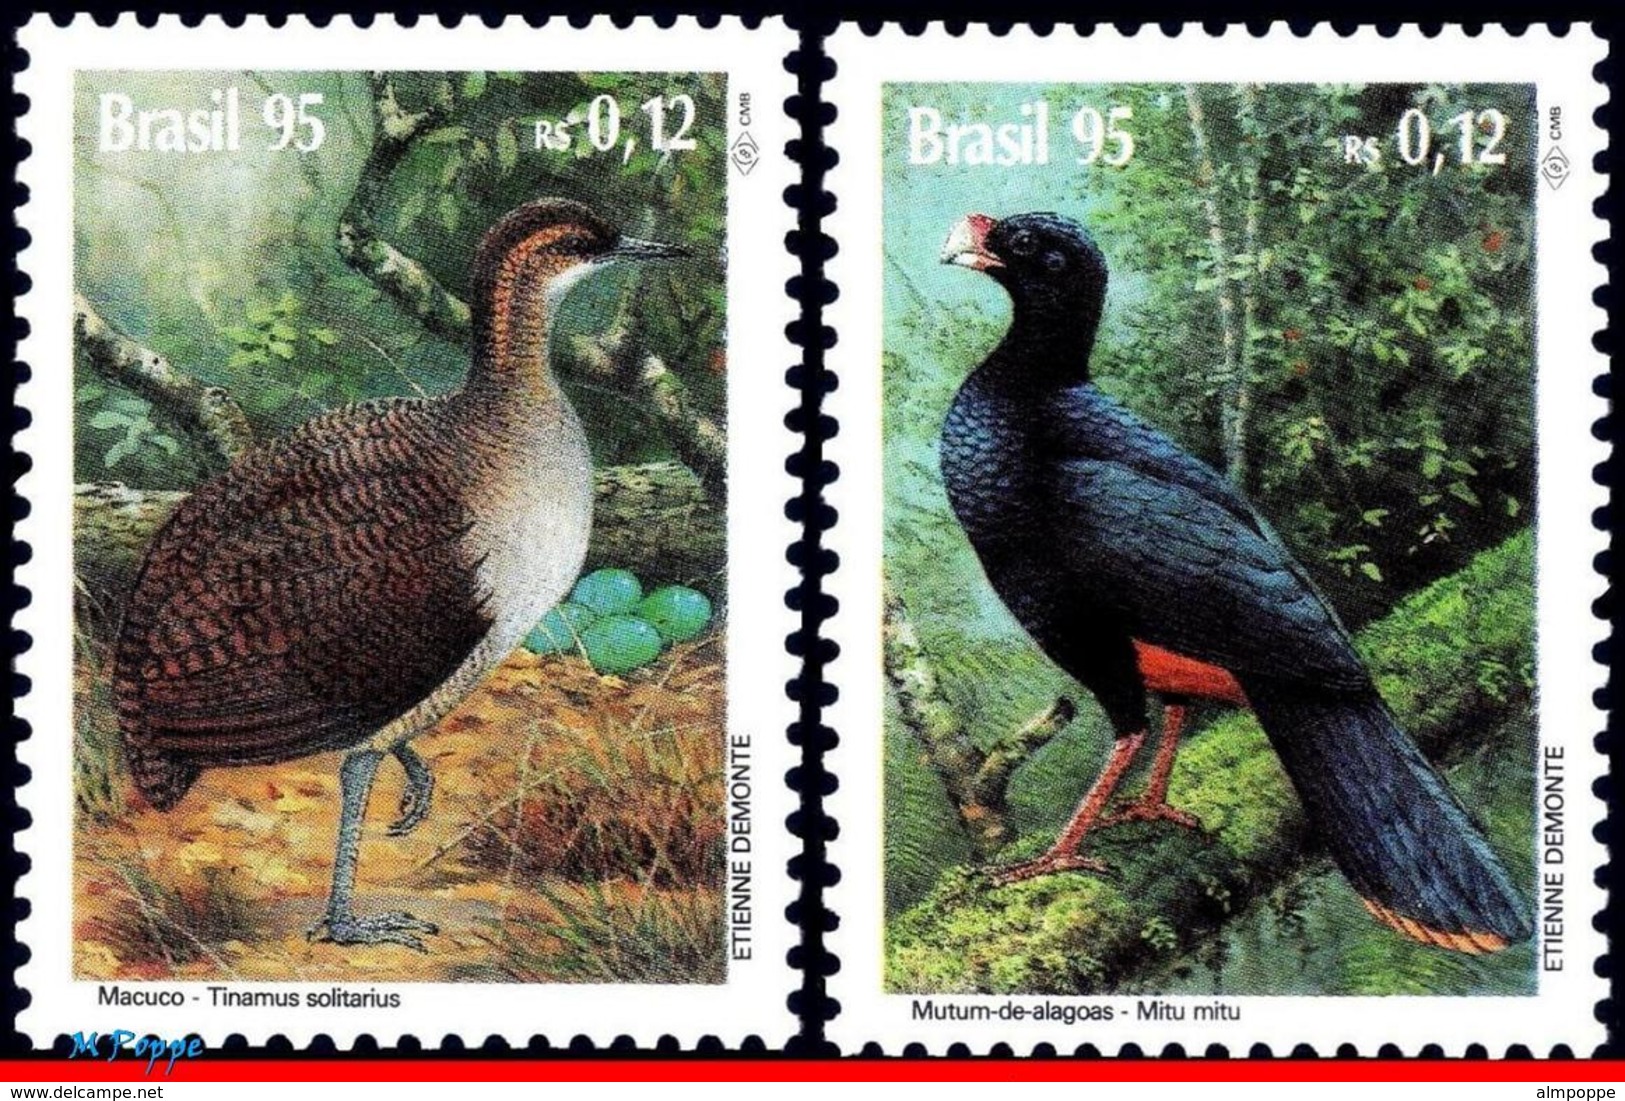 Ref. BR-2535-36 BRAZIL 1995 ANIMALS, FAUNA, ENDANGERED BIRDS,, CURASSOW, MI# 2644-45, SET MNH 2V Sc# 2535-2356 - Hühnervögel & Fasanen